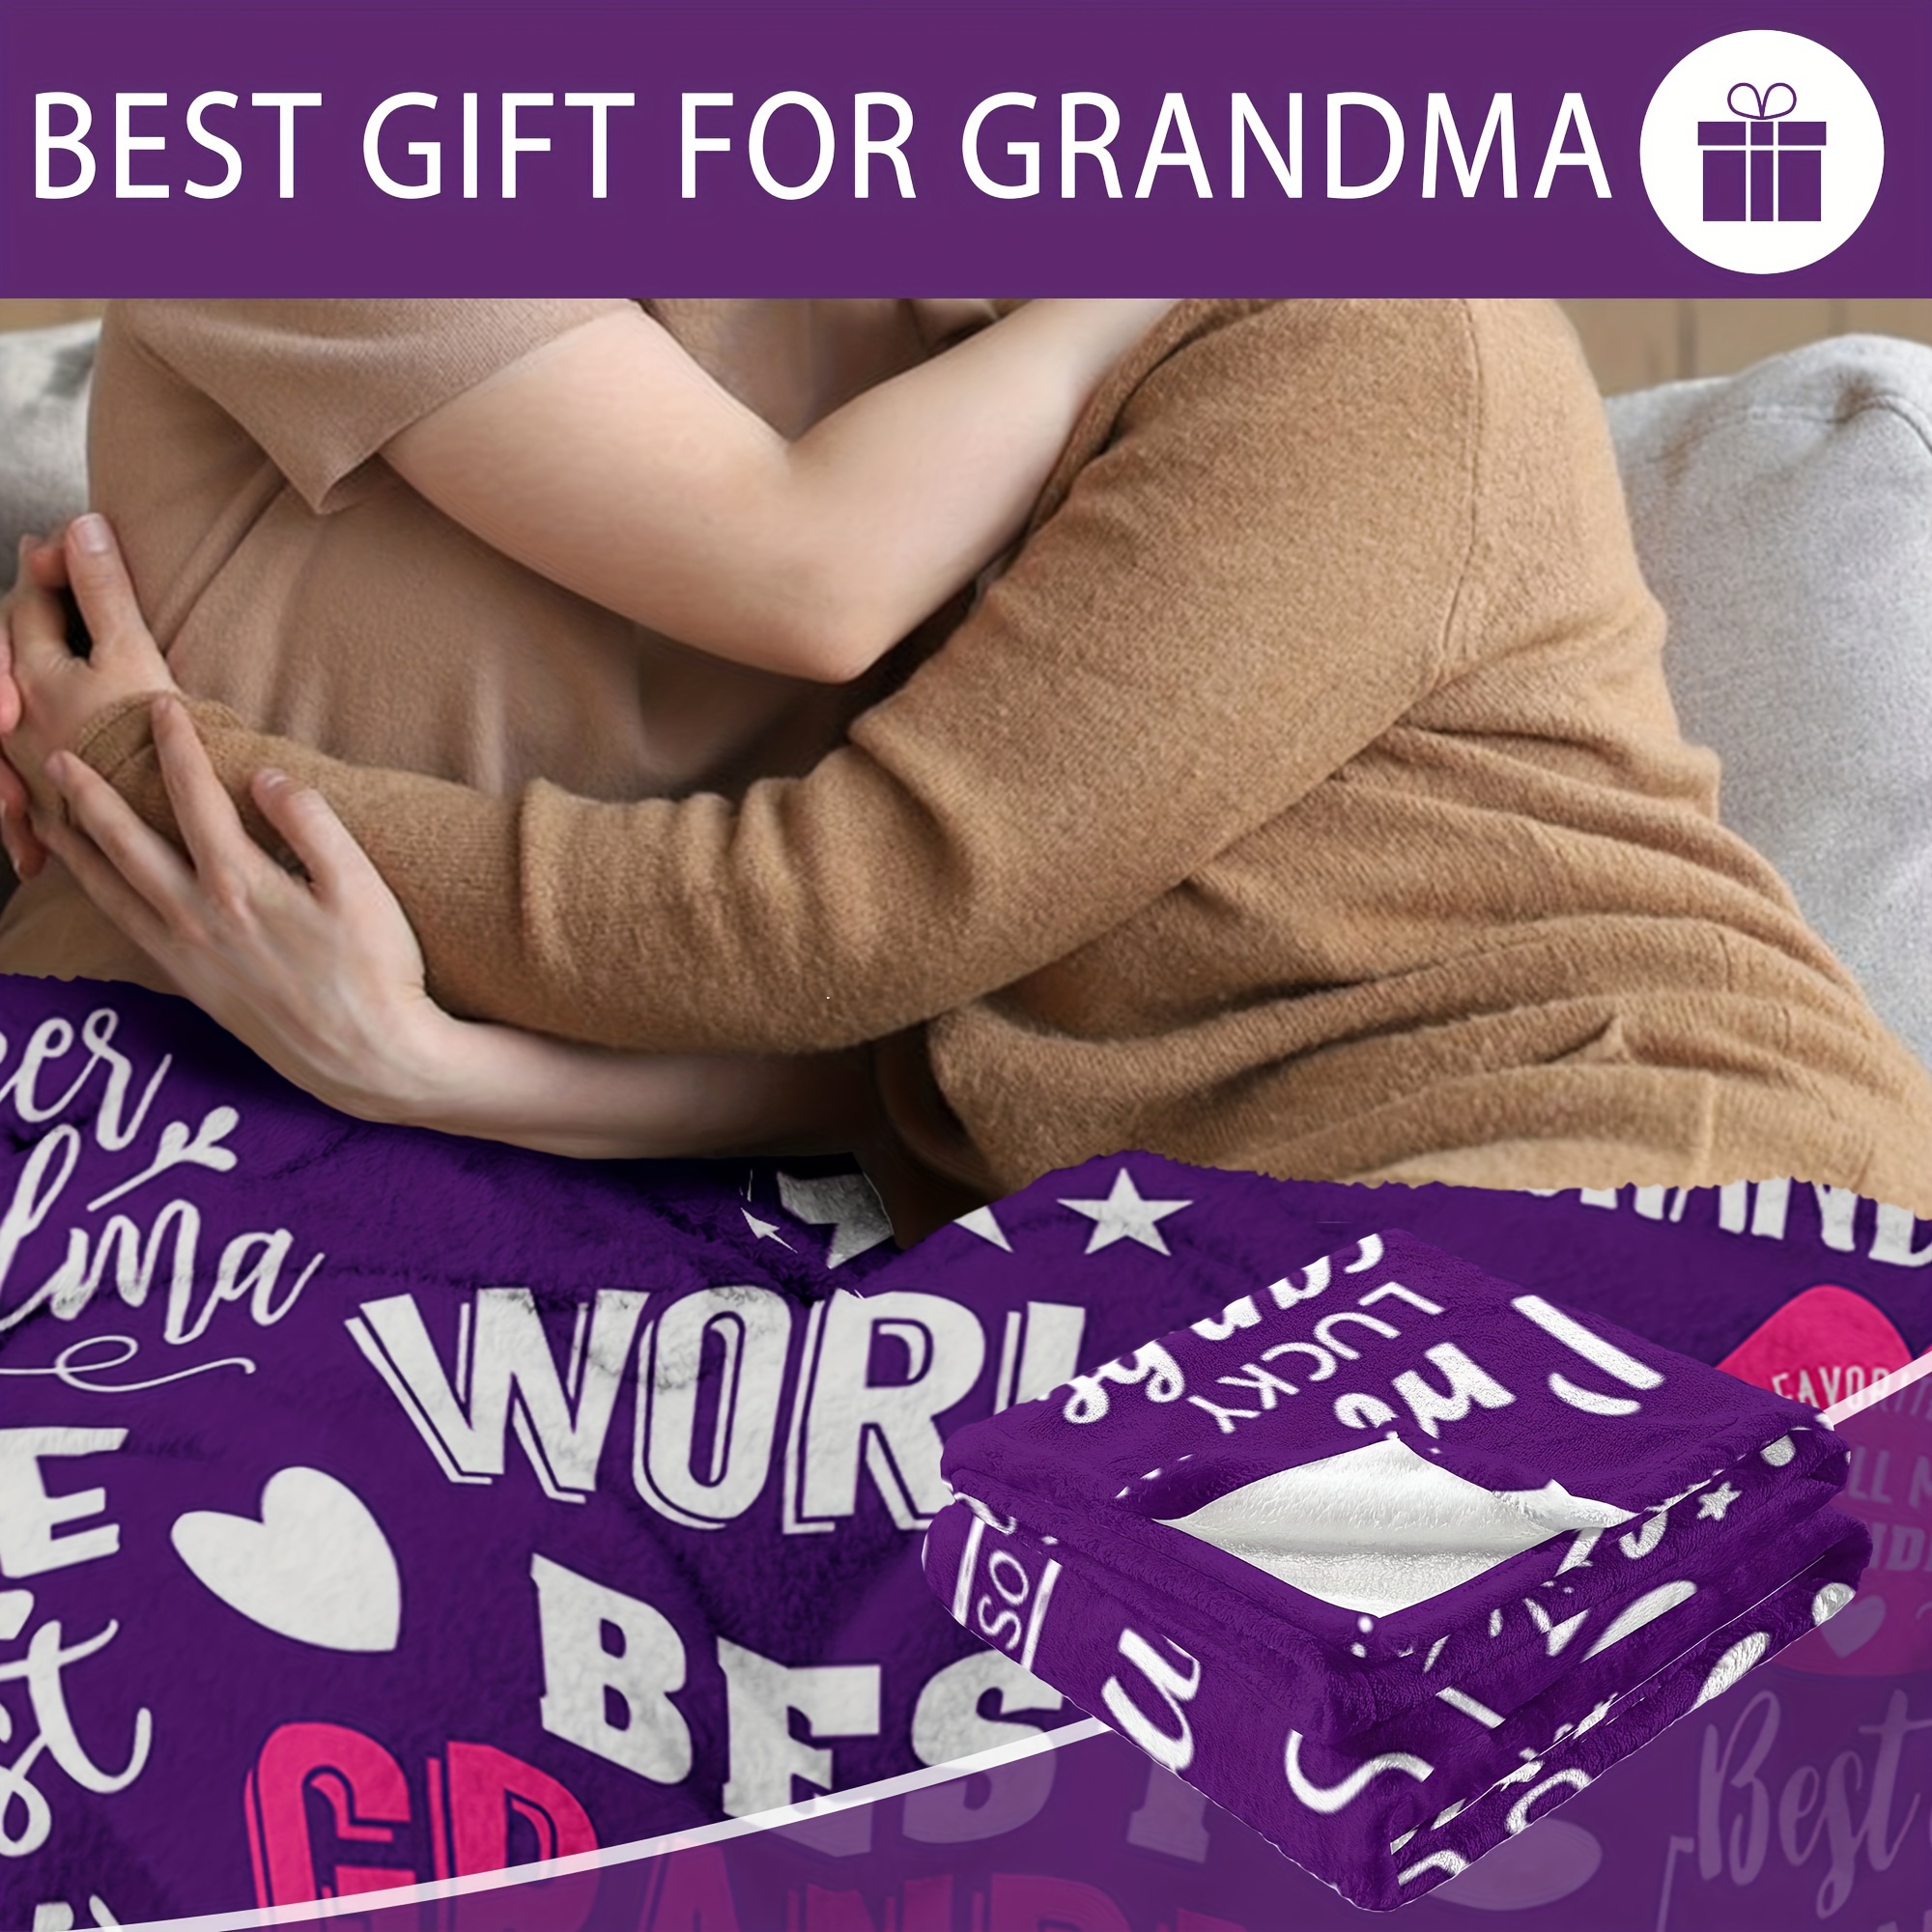 Gifts for Grandma Blanket,Grandma Gifts from Grandkids,Best Grandma  Gifts,Grandma Birthday Gifts from Grandchildren,Gifts for Grandmother,Throw